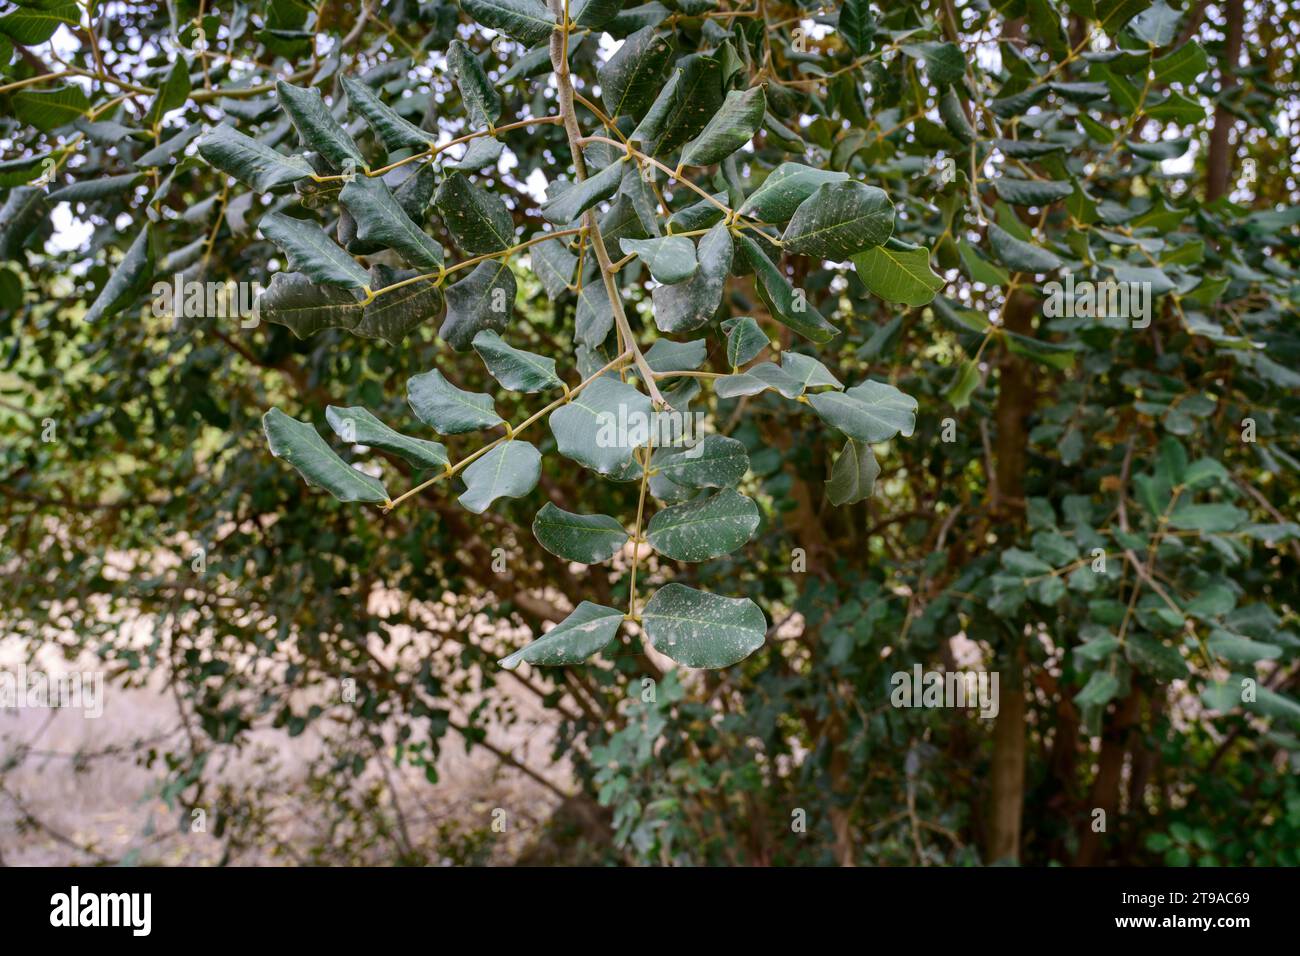 Close up of the male flowers of a Carob tree The carob (Ceratonia siliqua) is a flowering evergreen tree or shrub in the Caesalpinioideae sub-family o Stock Photo